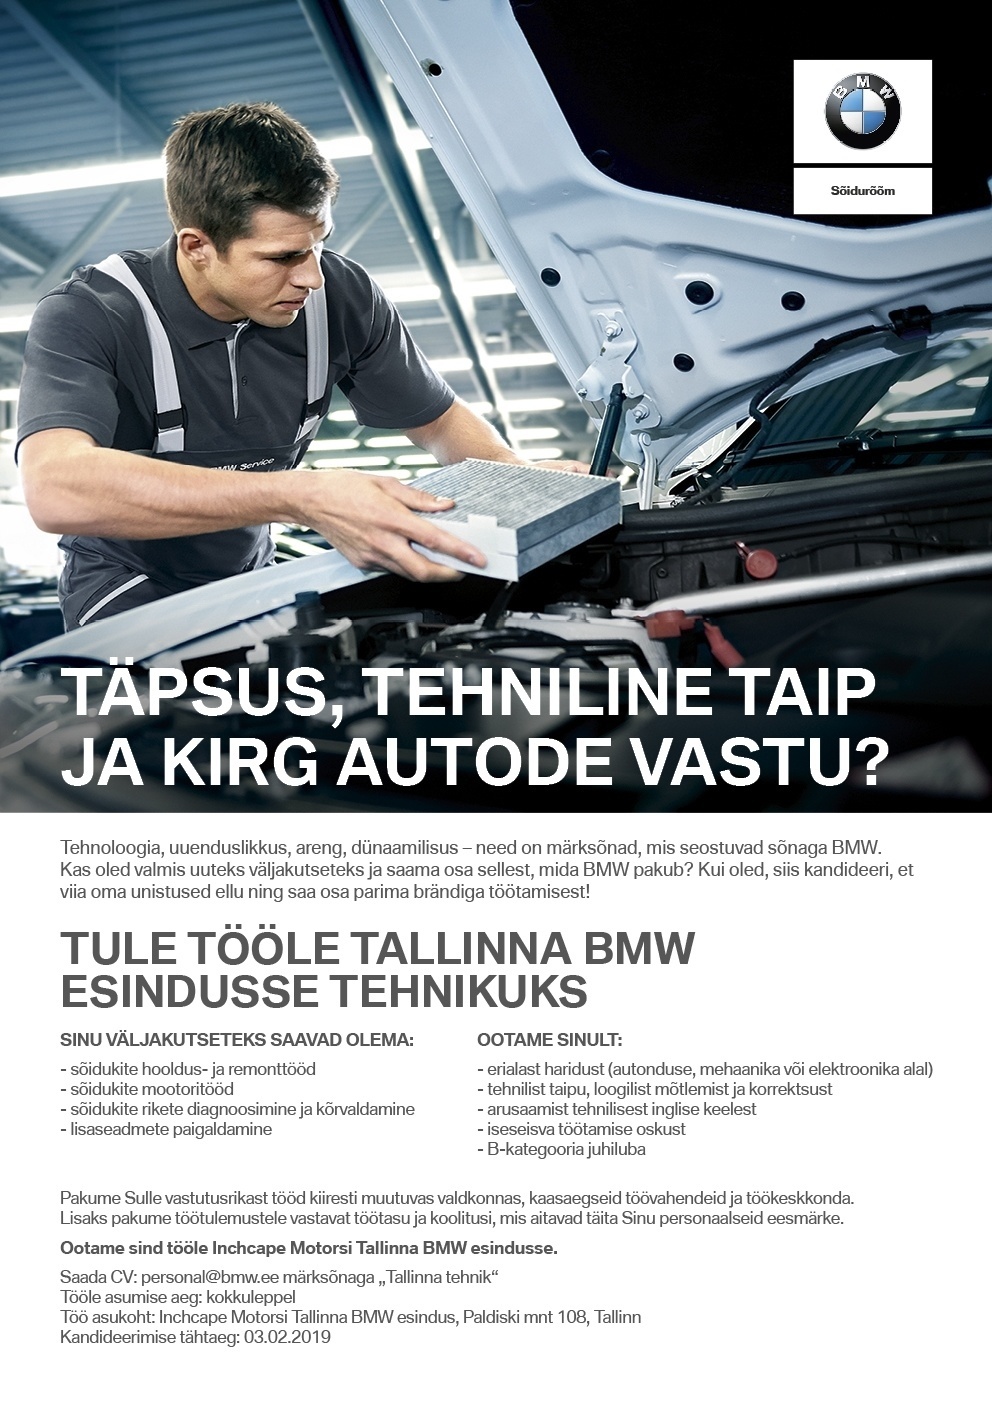 Inchcape Motors Tallinna BMW esindus Tehnik